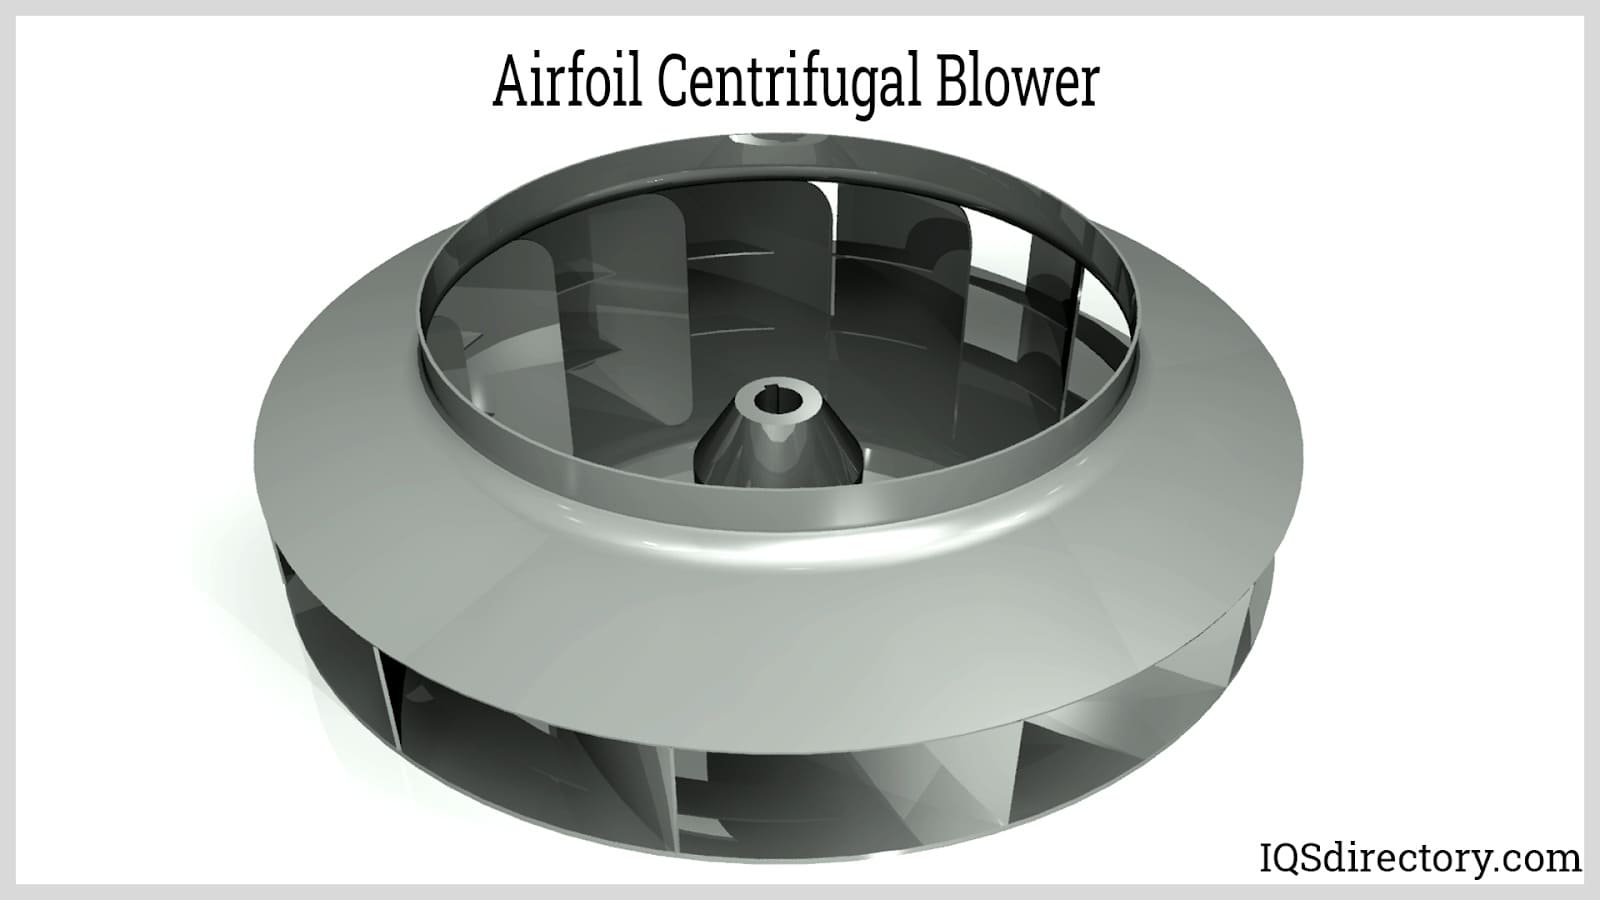 Airfoil Centrifugal Blower